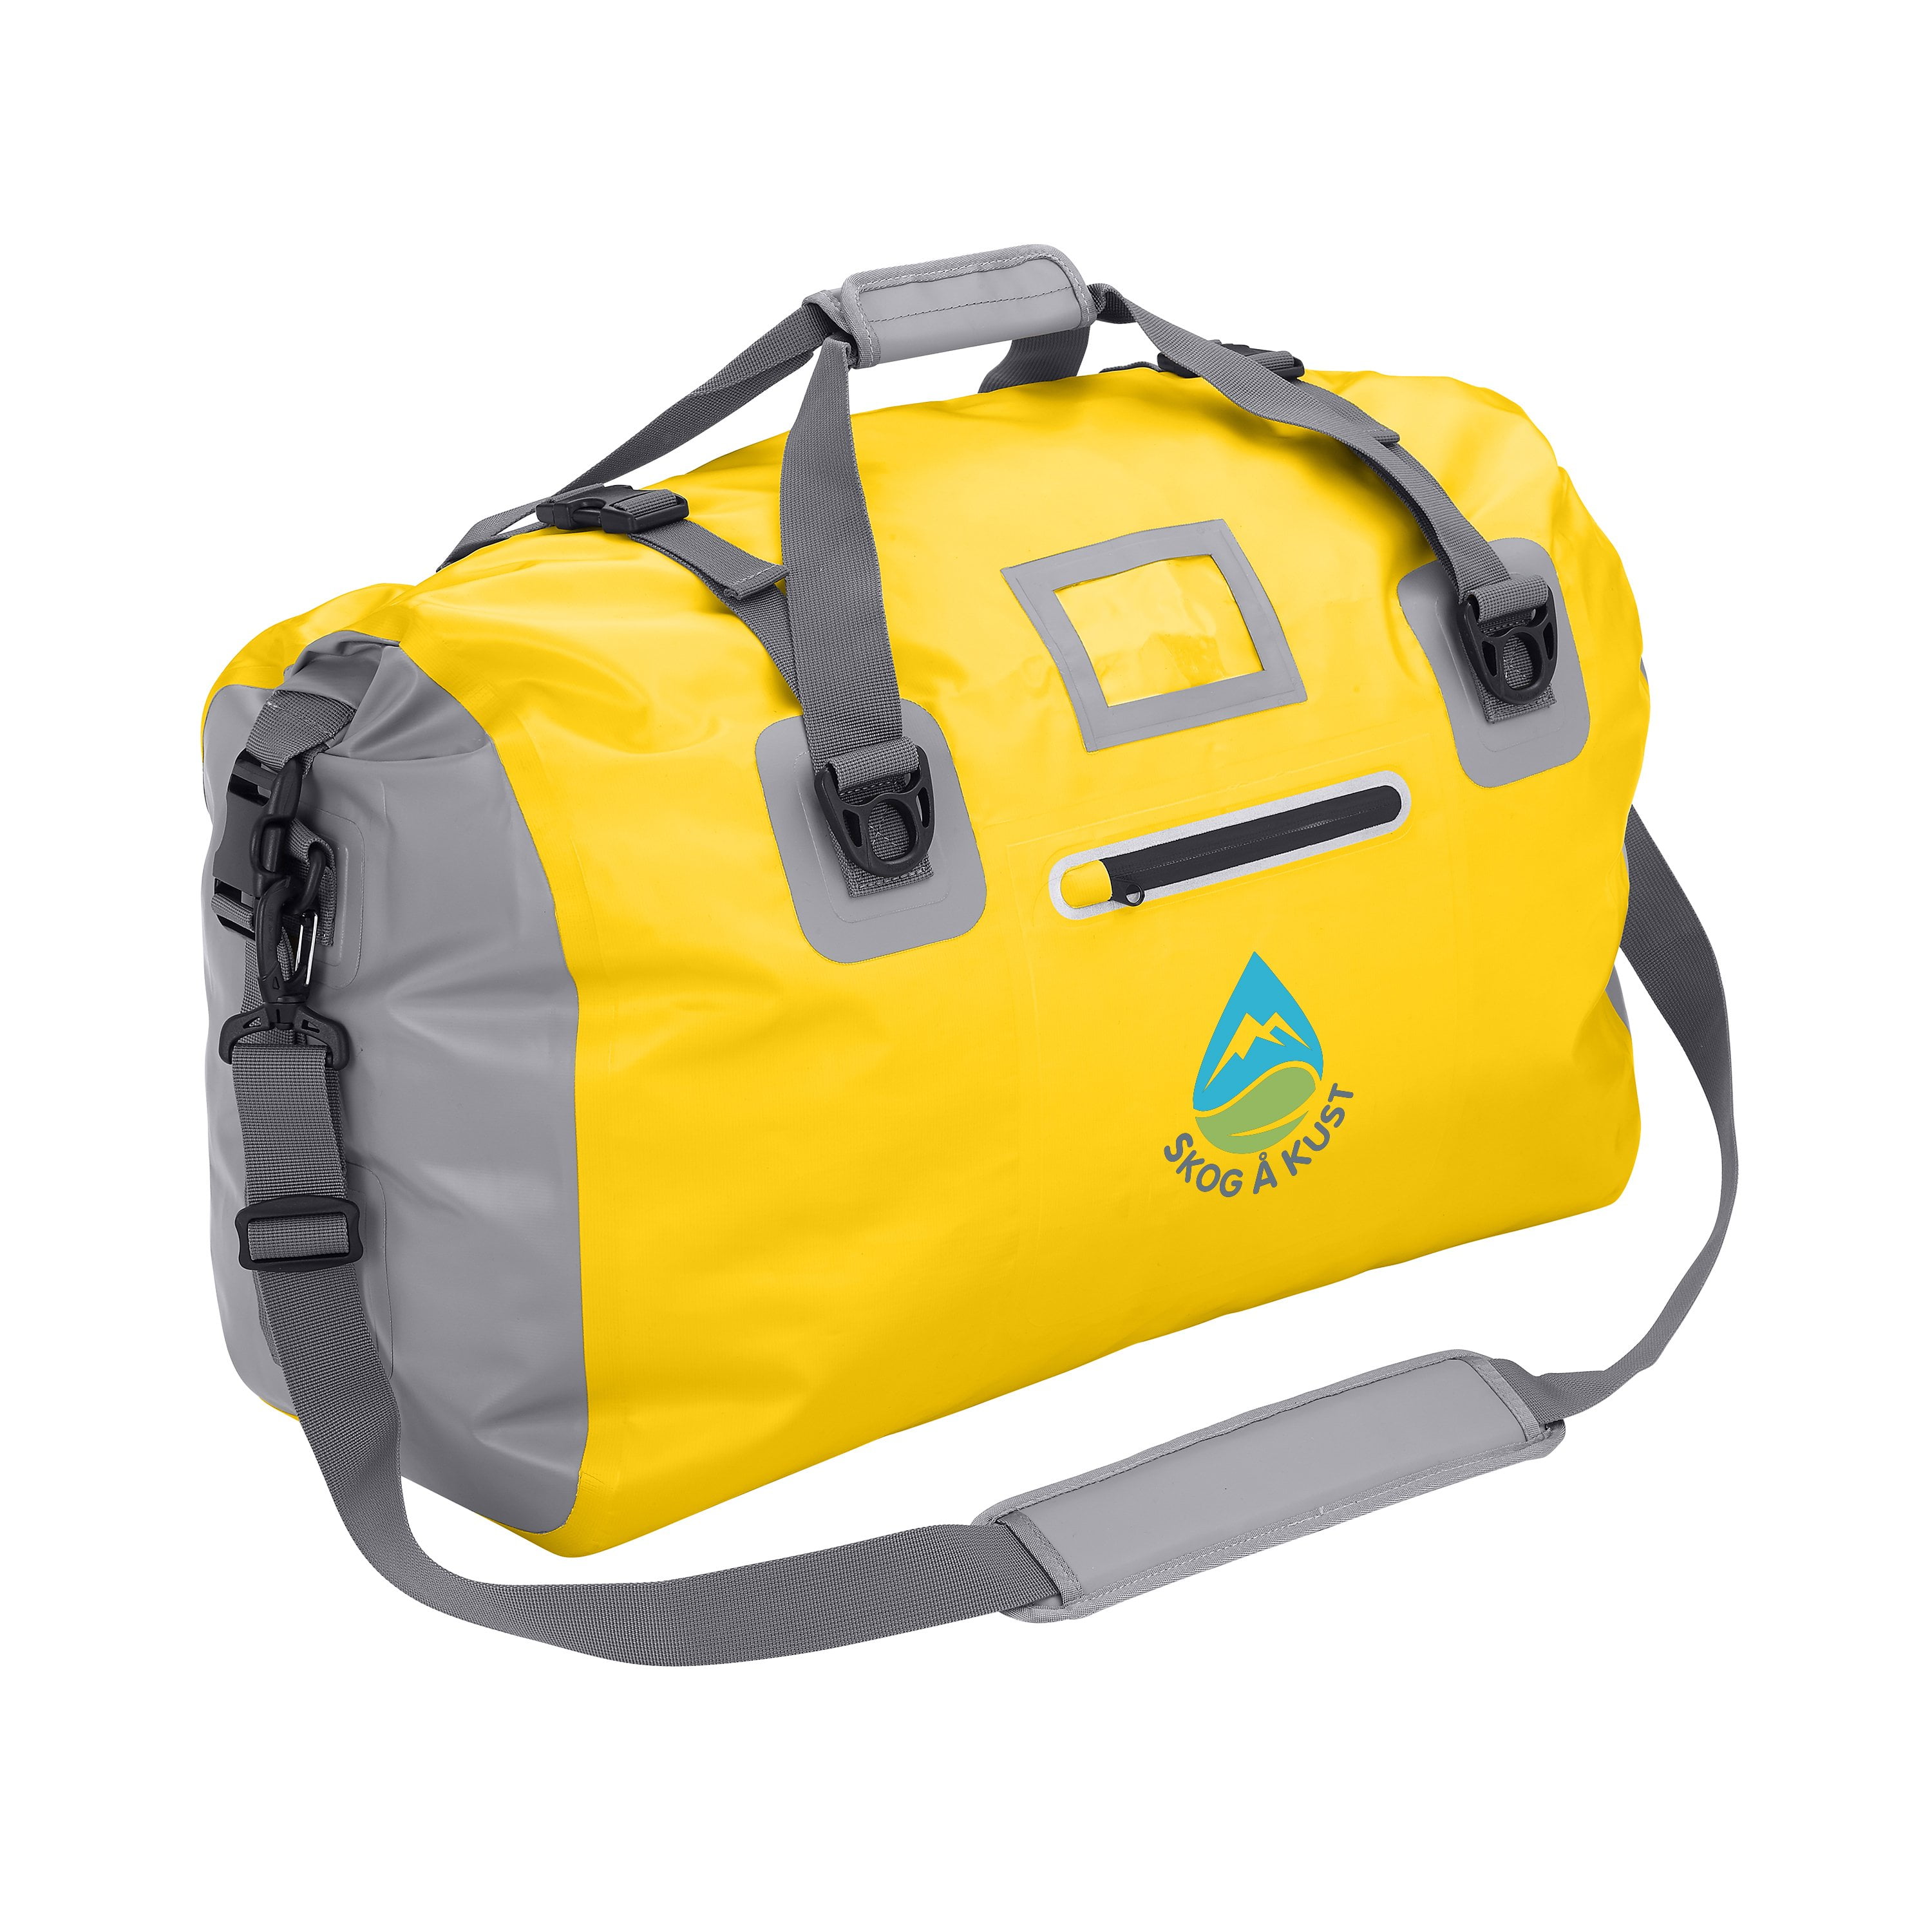 Skog A Kust Yellow DuffelSak Waterproof 60L Duffel Bag | 500D PVC, Roll Top Duffle, Welded Seams ...